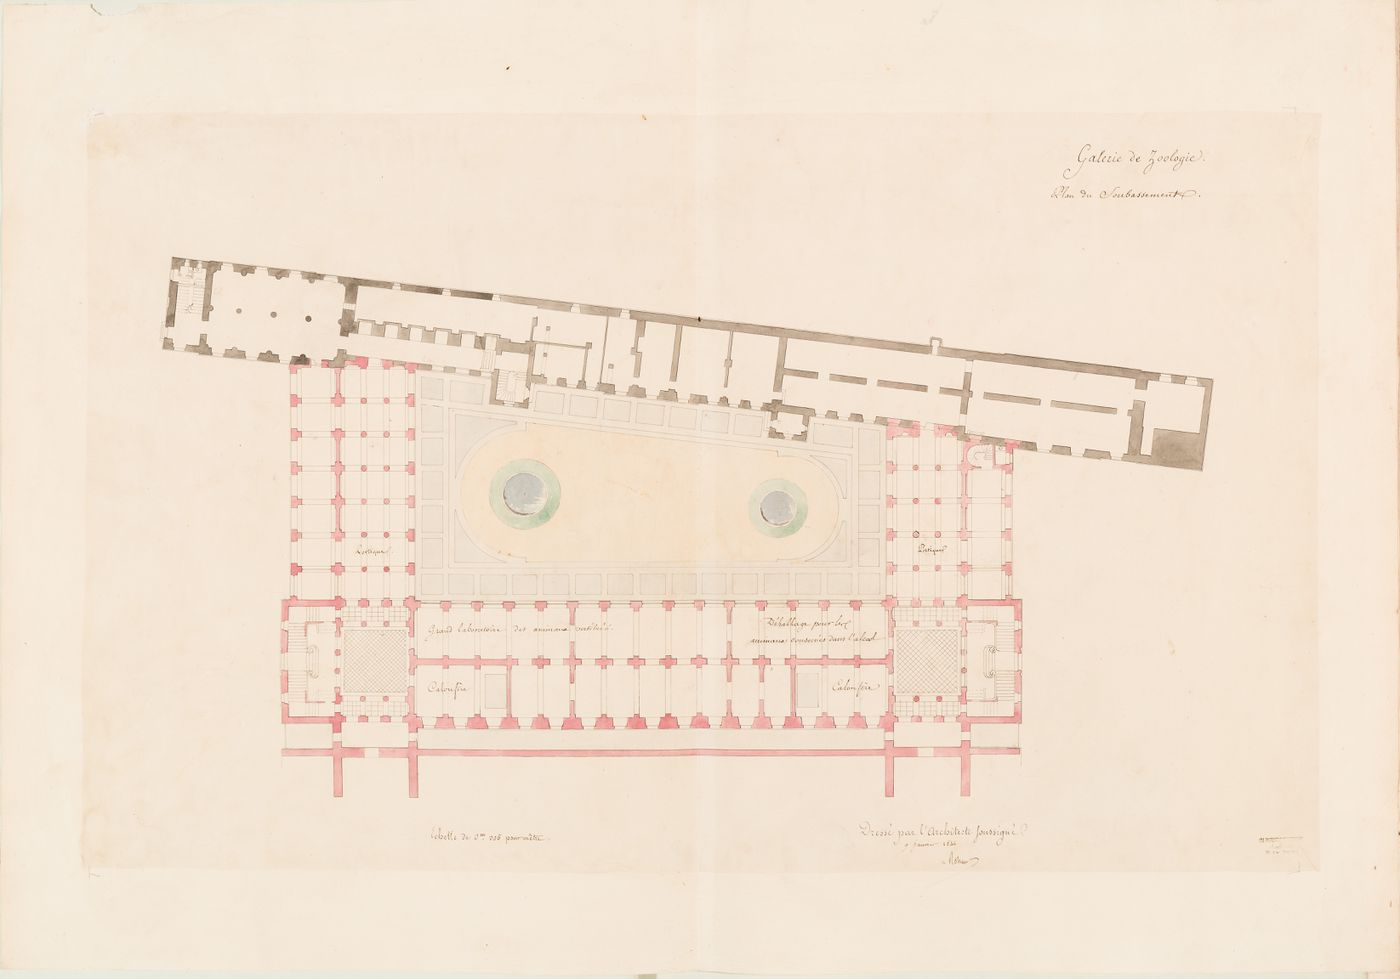 Project for a Galerie de zoologie, 1846: Plan for the "soubassement"